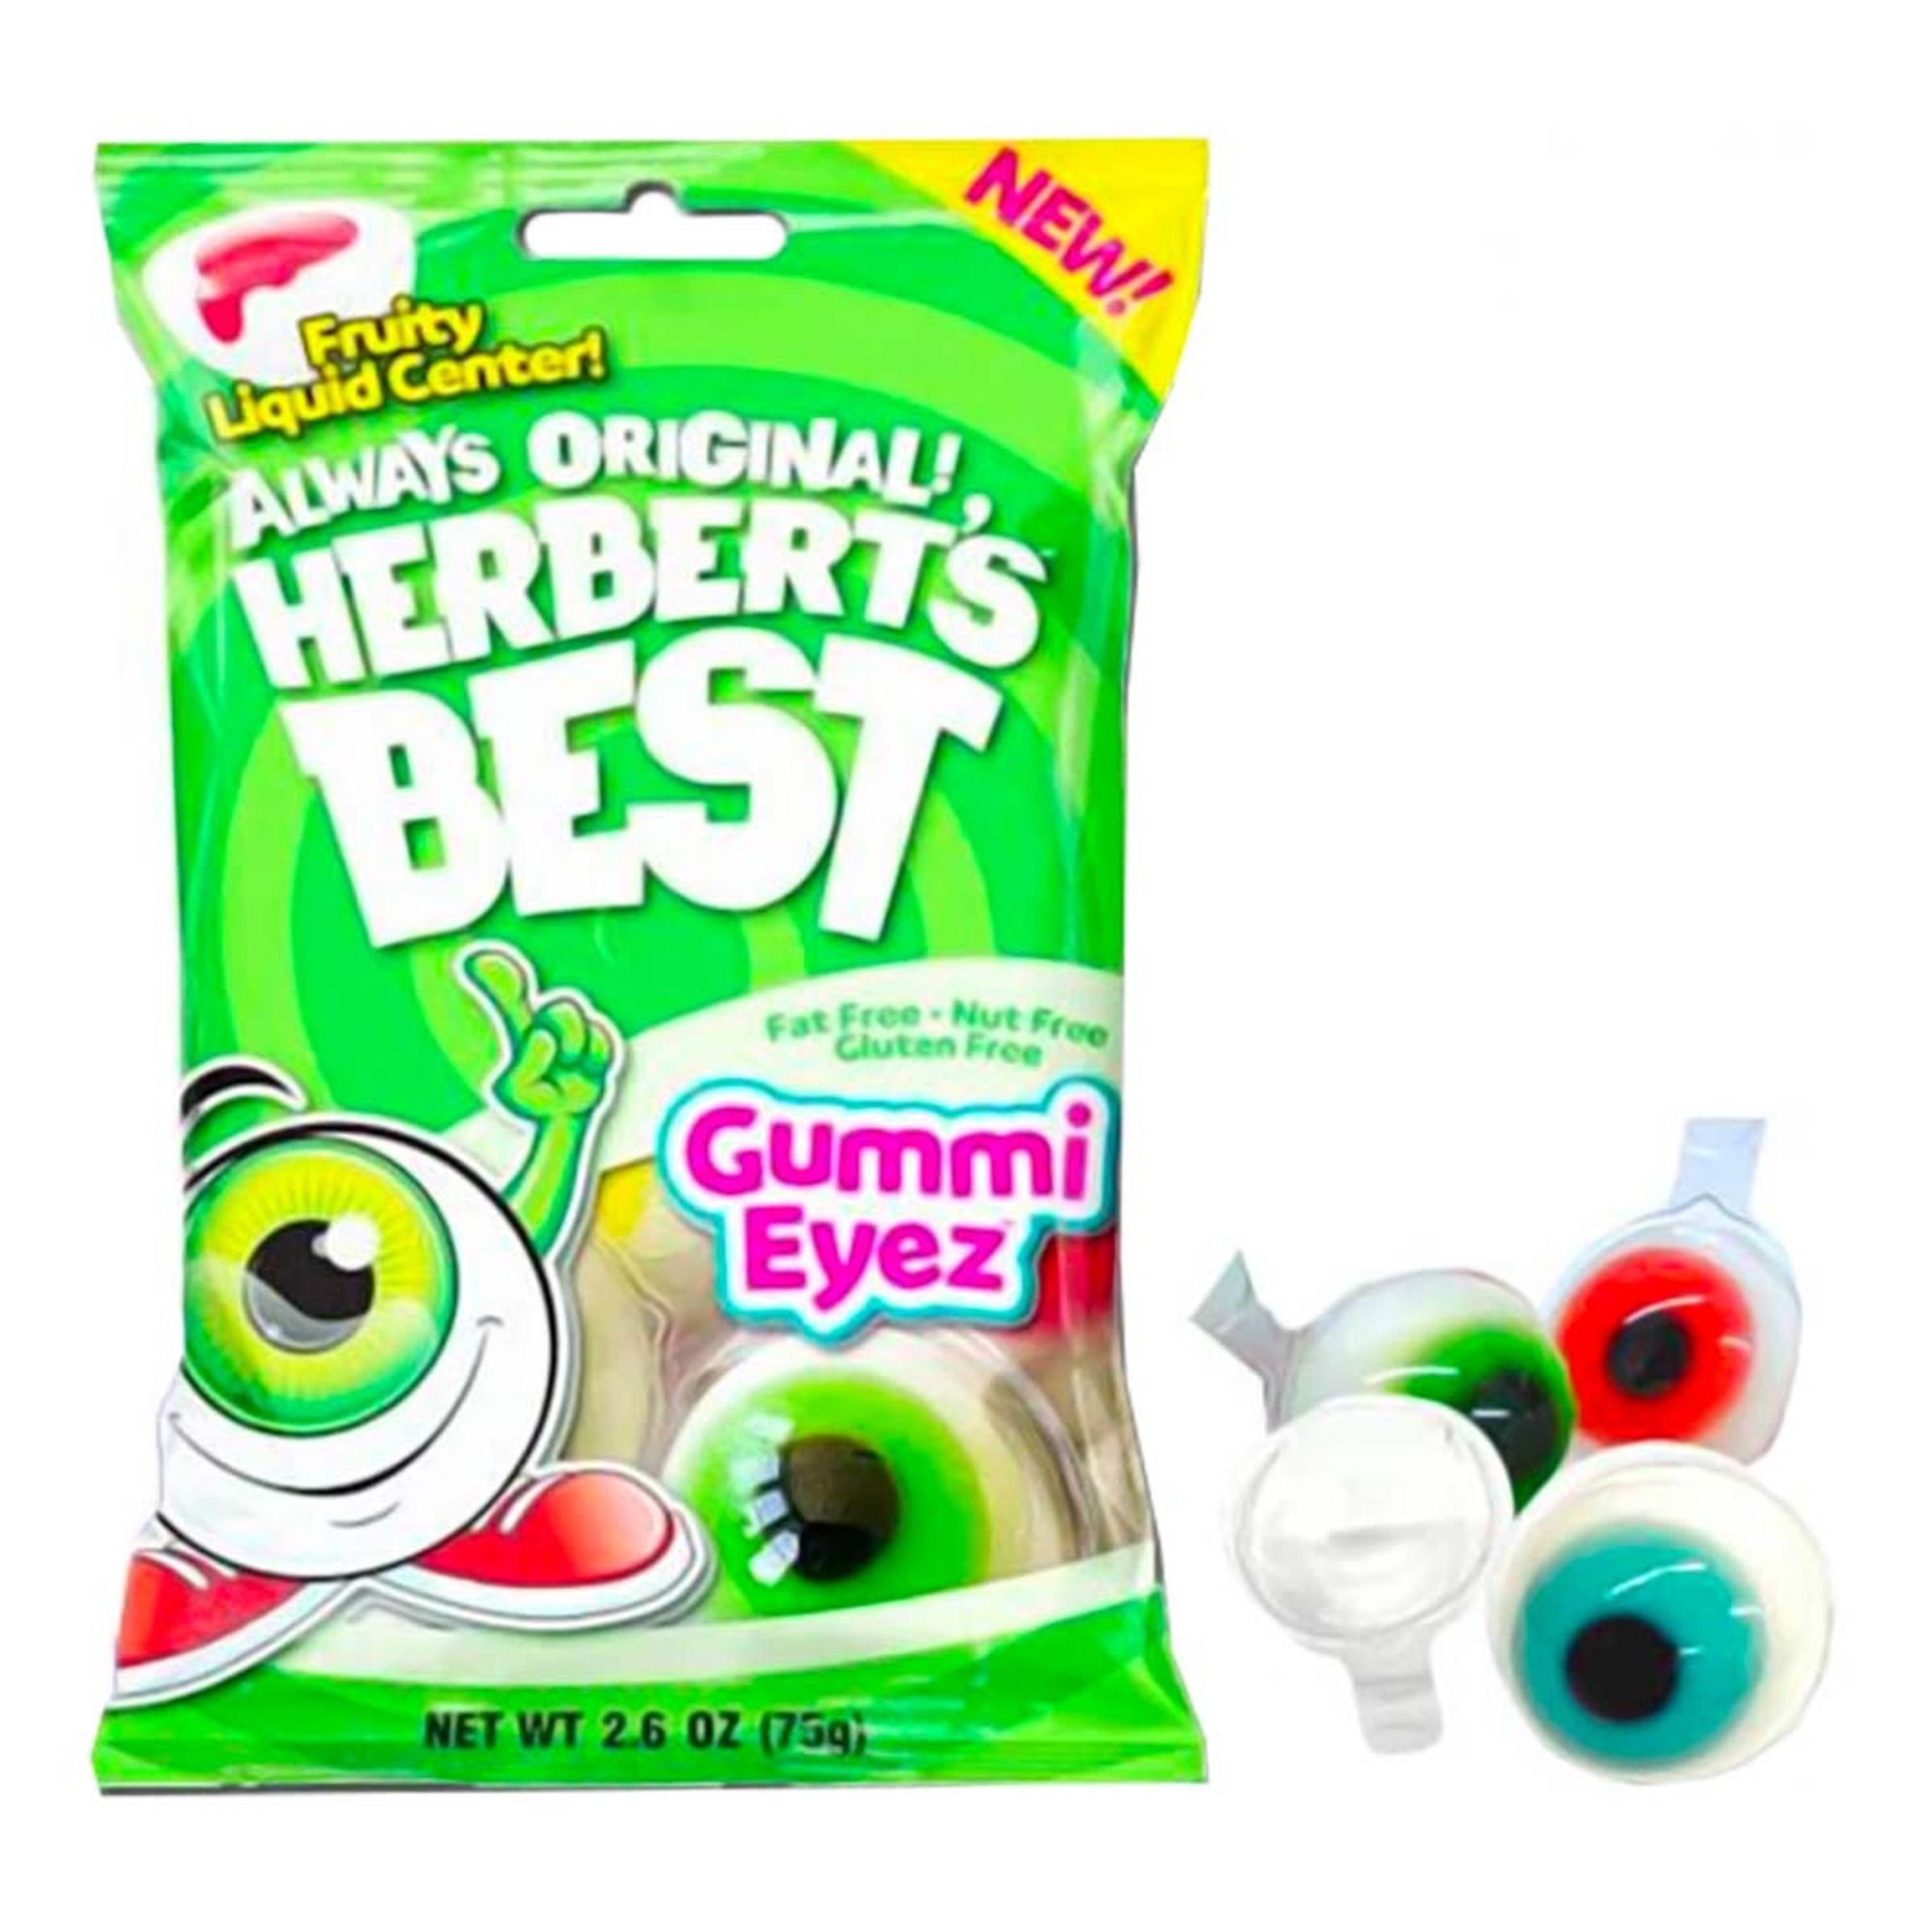 Herberts Gummy Eyez - 75 gram